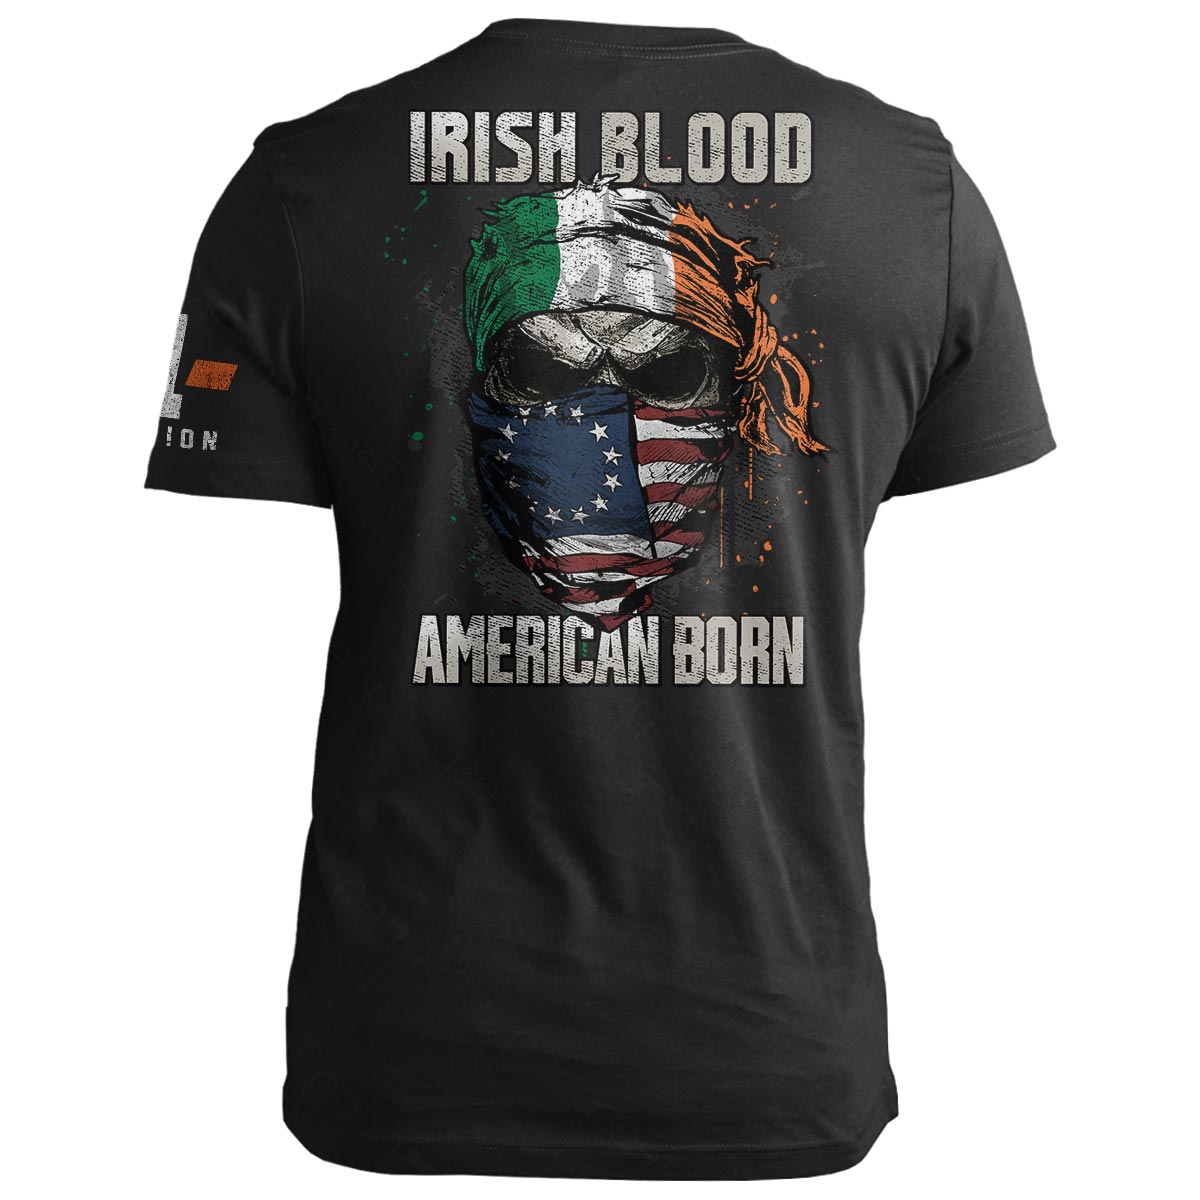 Irish Blood. American Born